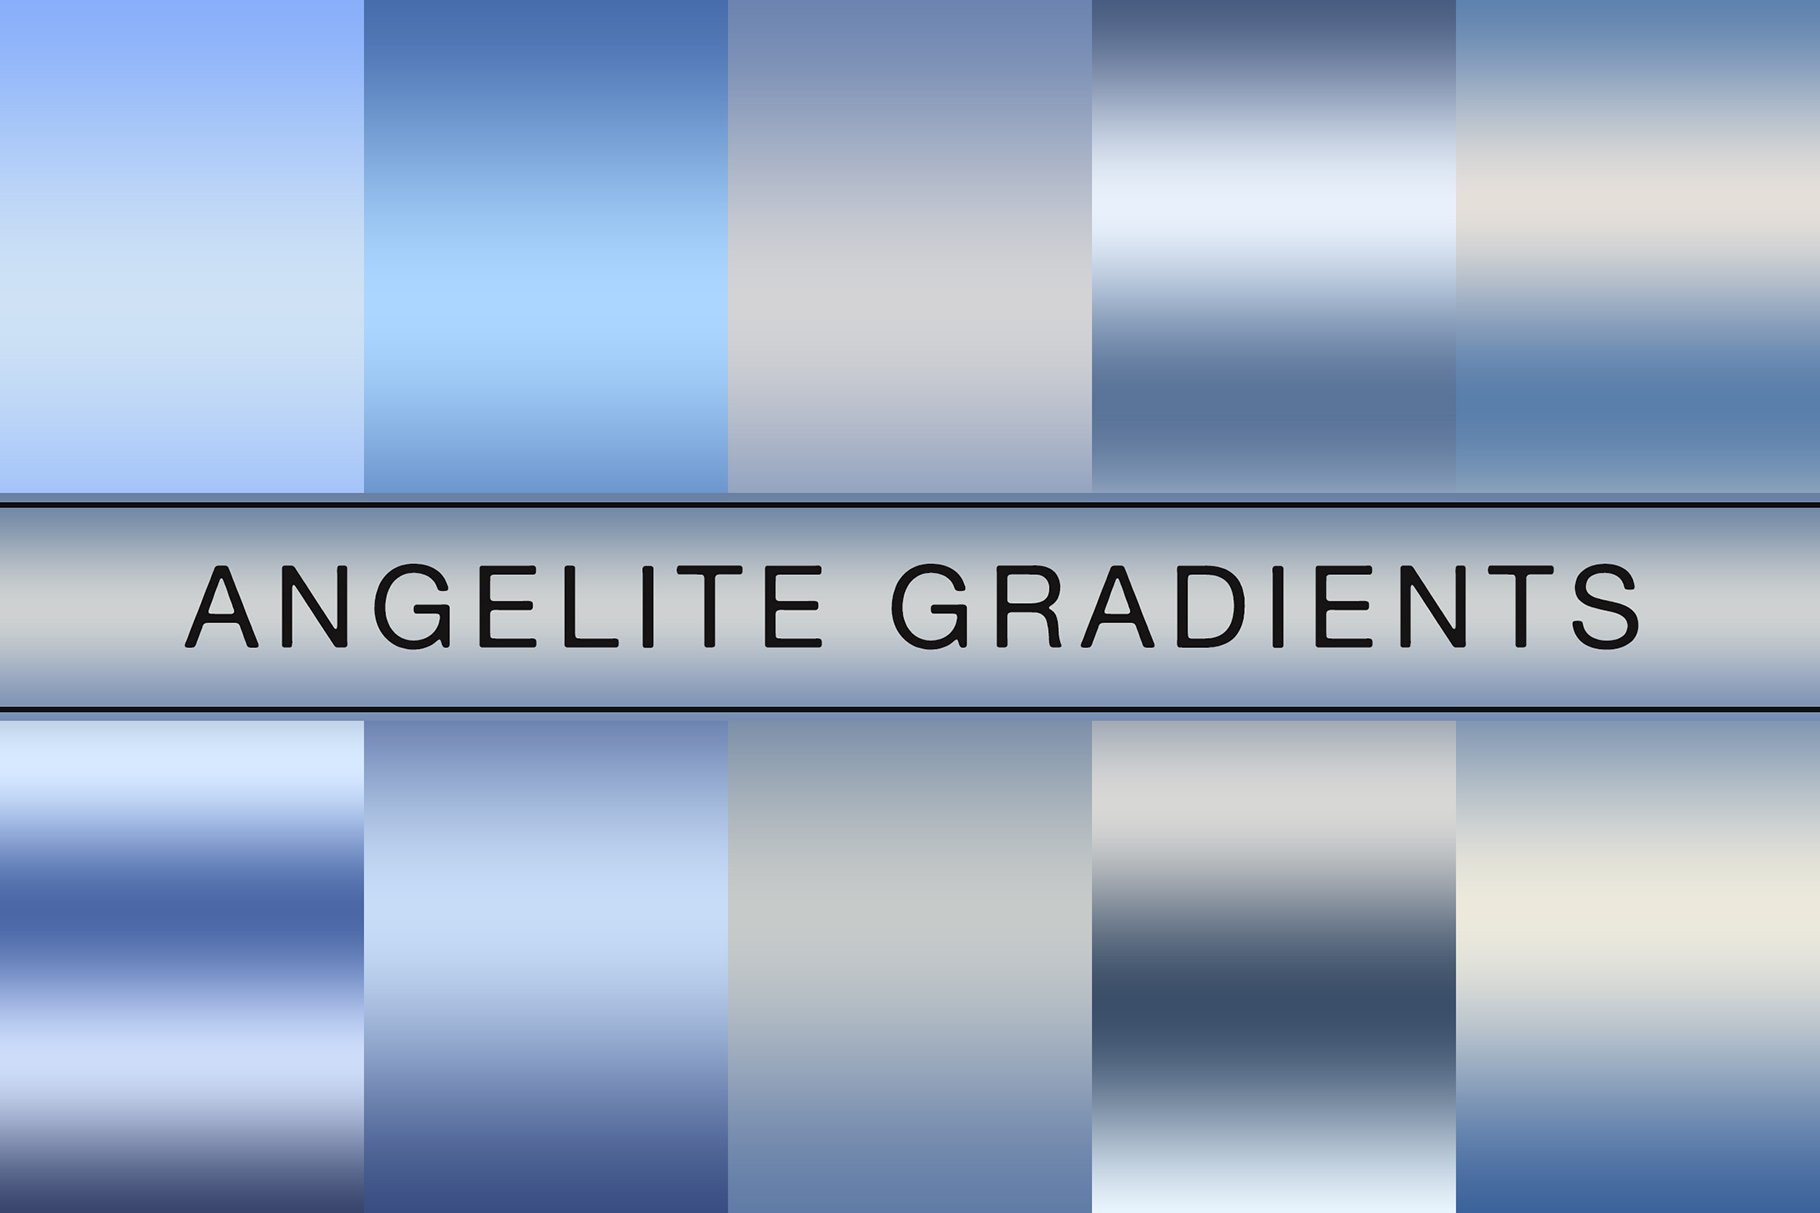 Angelite Gradients cover image.